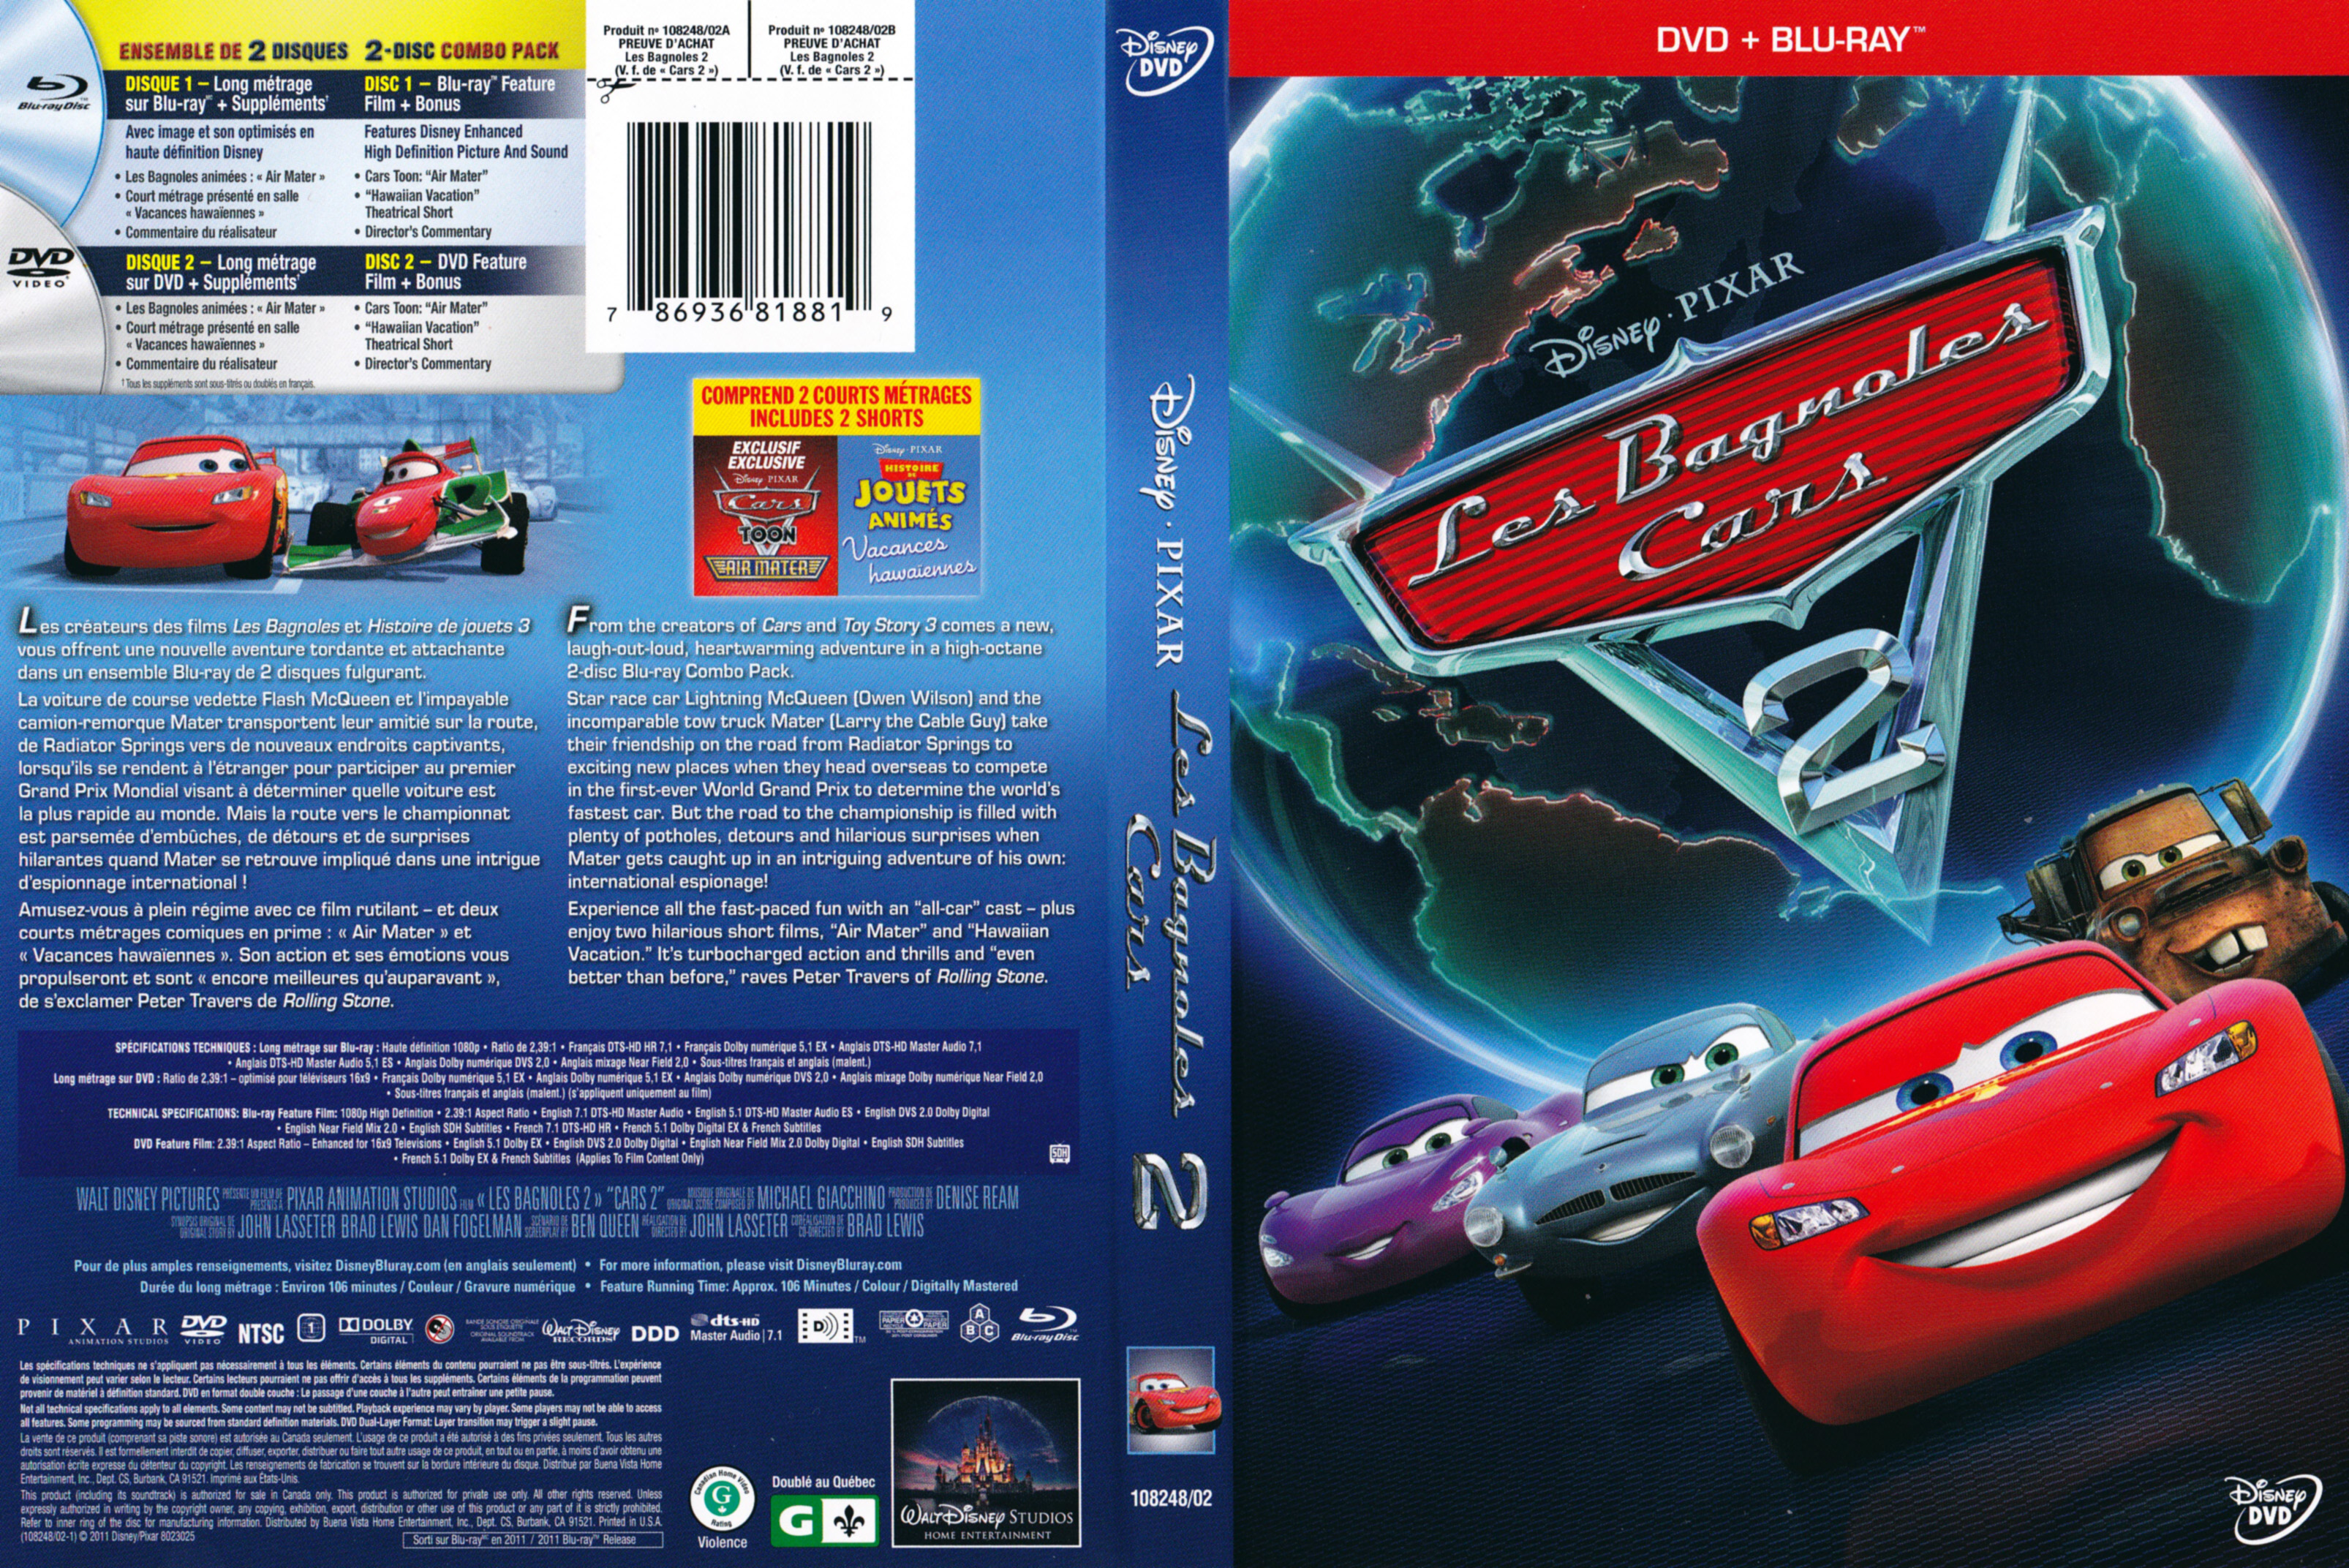 Jaquette DVD Les Bagnoles 2 - Cars 2 (Canadienne) (BLU-RAY)